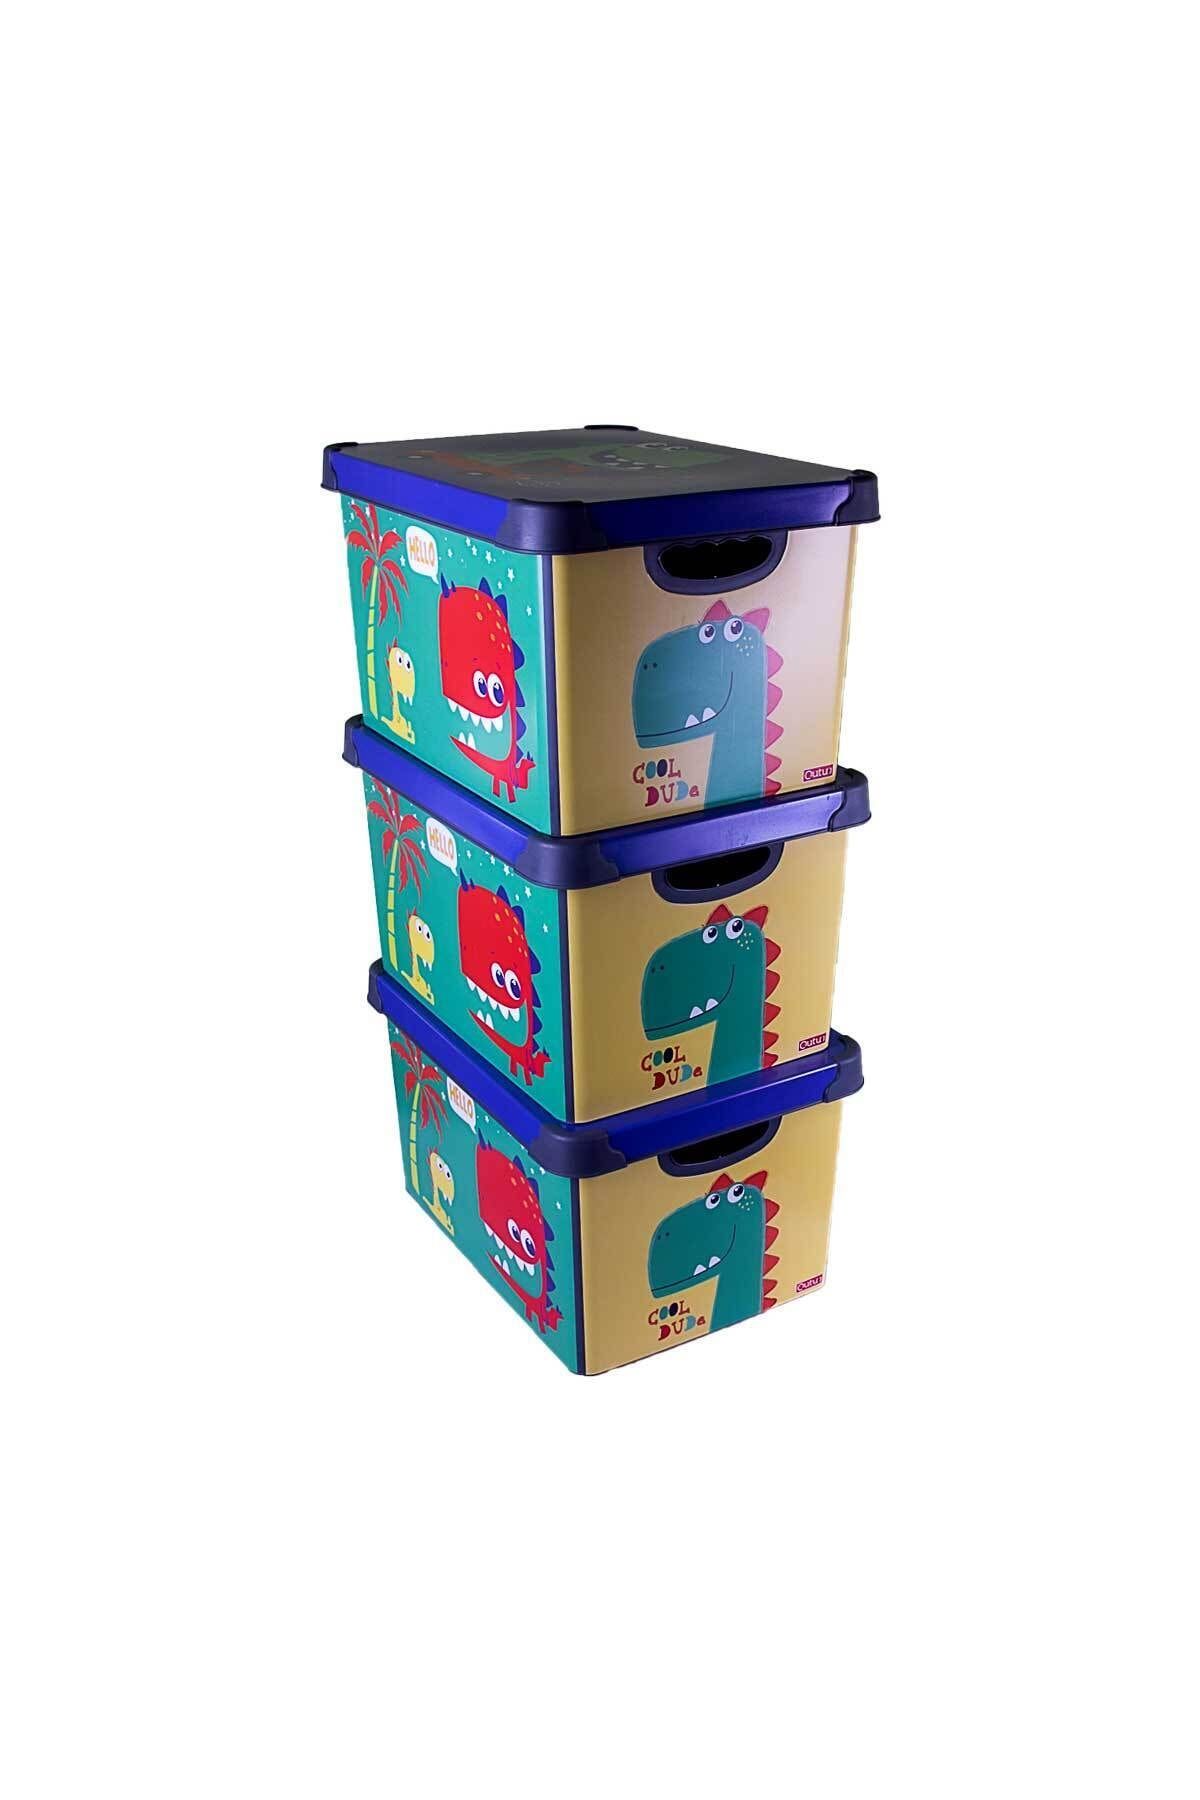 QUTU Style Box Dude Dekoratif Oyuncak Kutu Seti - 3x 20 Litre